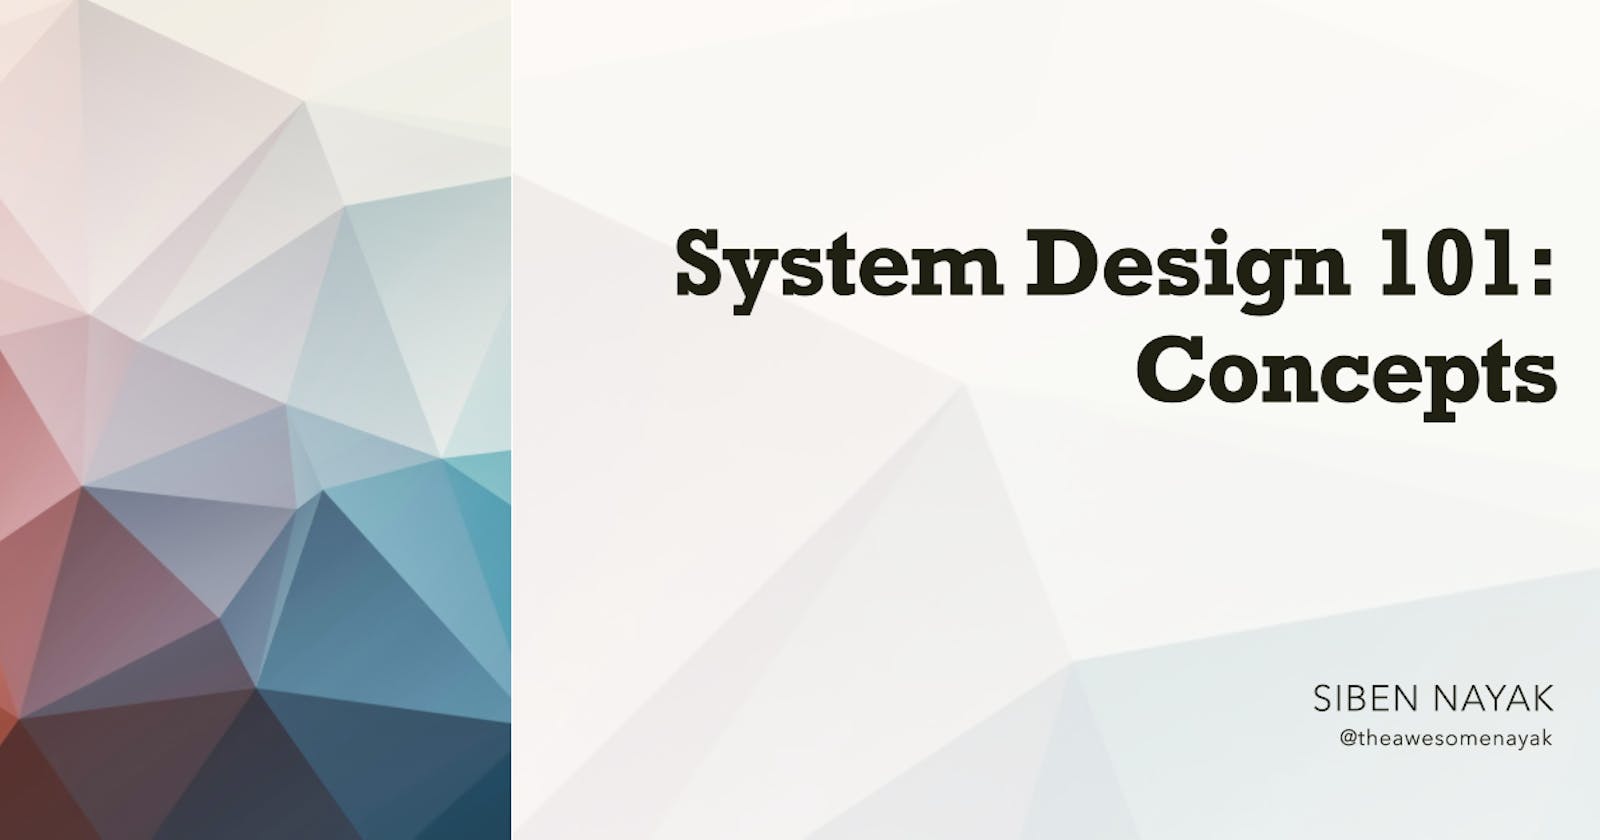 System Design 101 - Concepts